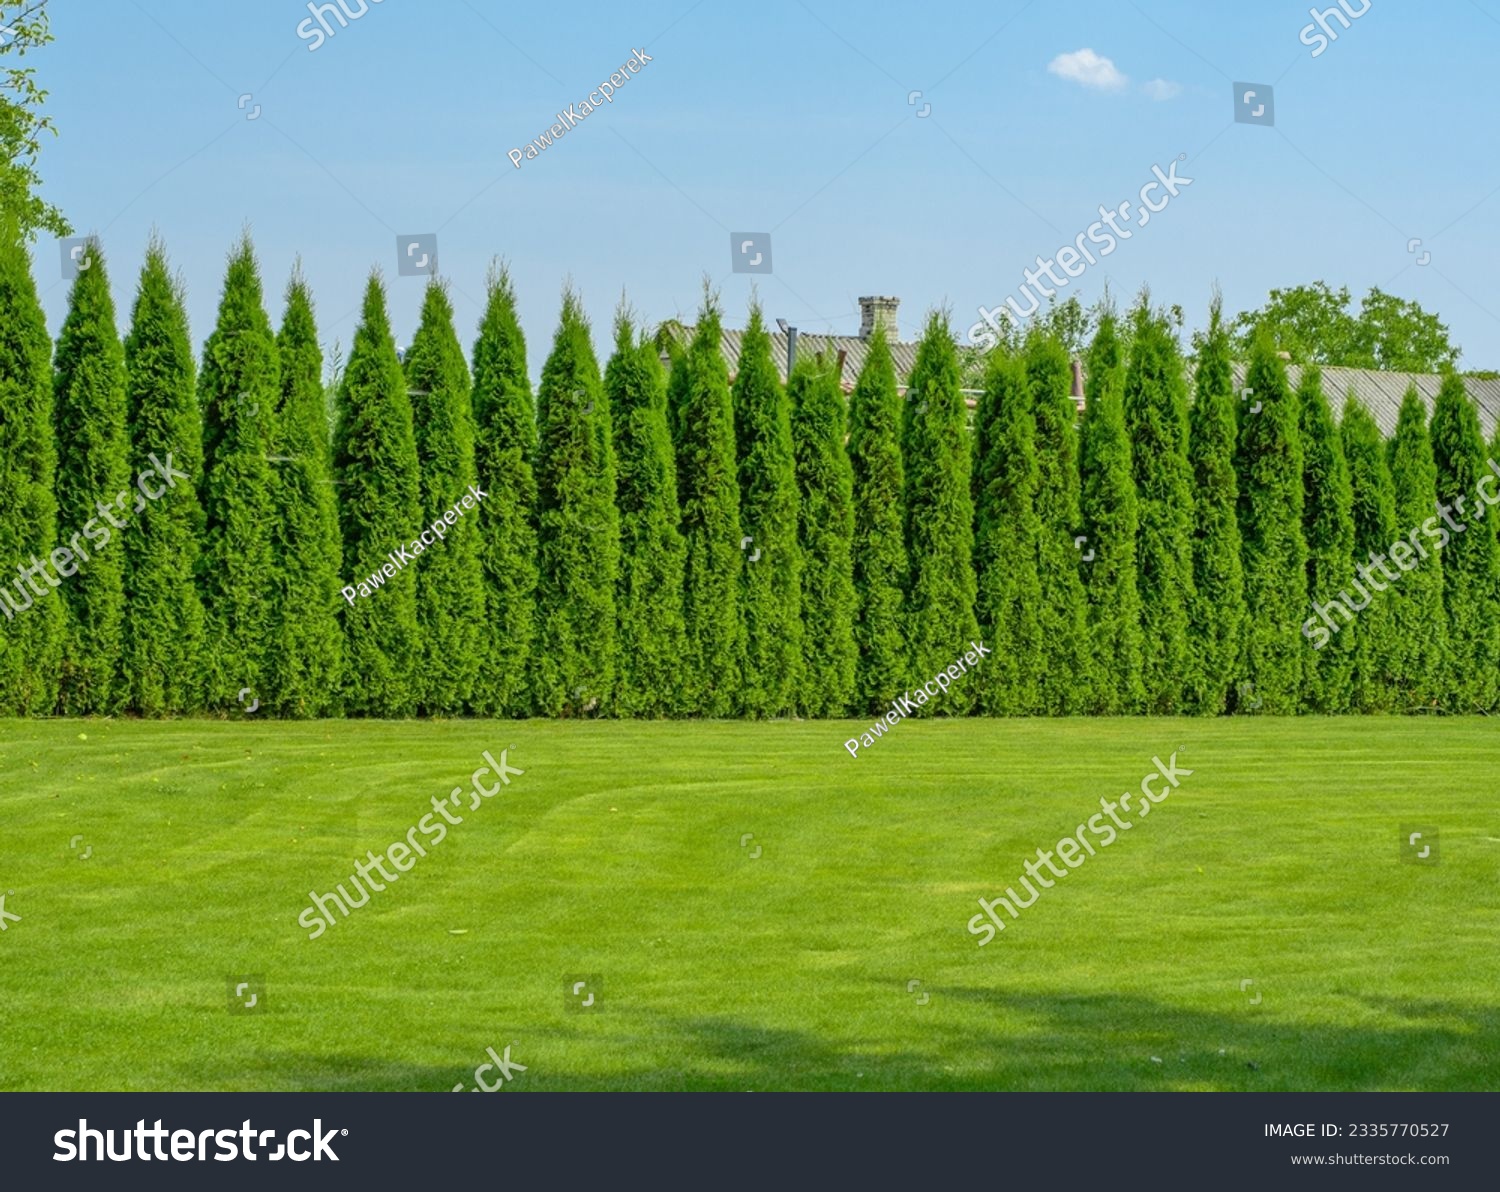 Tall thujas, beautiful hedge in the garden #2335770527